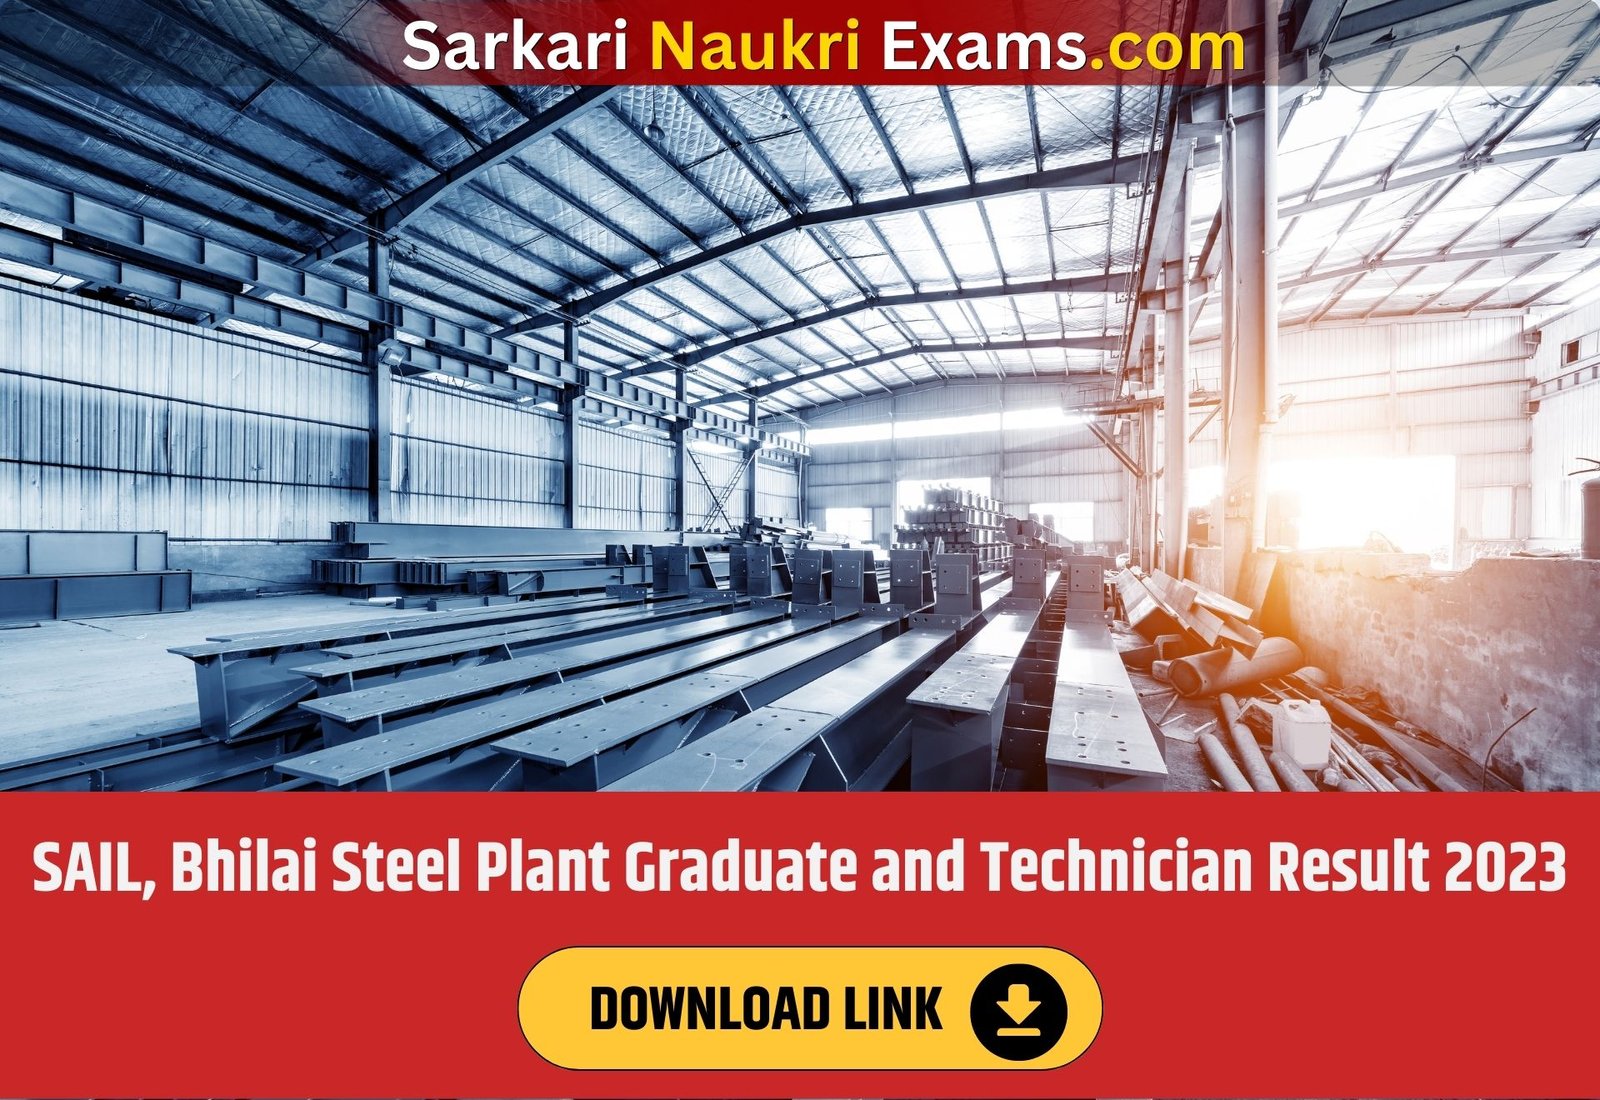 SAIL, Bhilai Steel Plant Graduate and Technician Result 2023 | Merit List